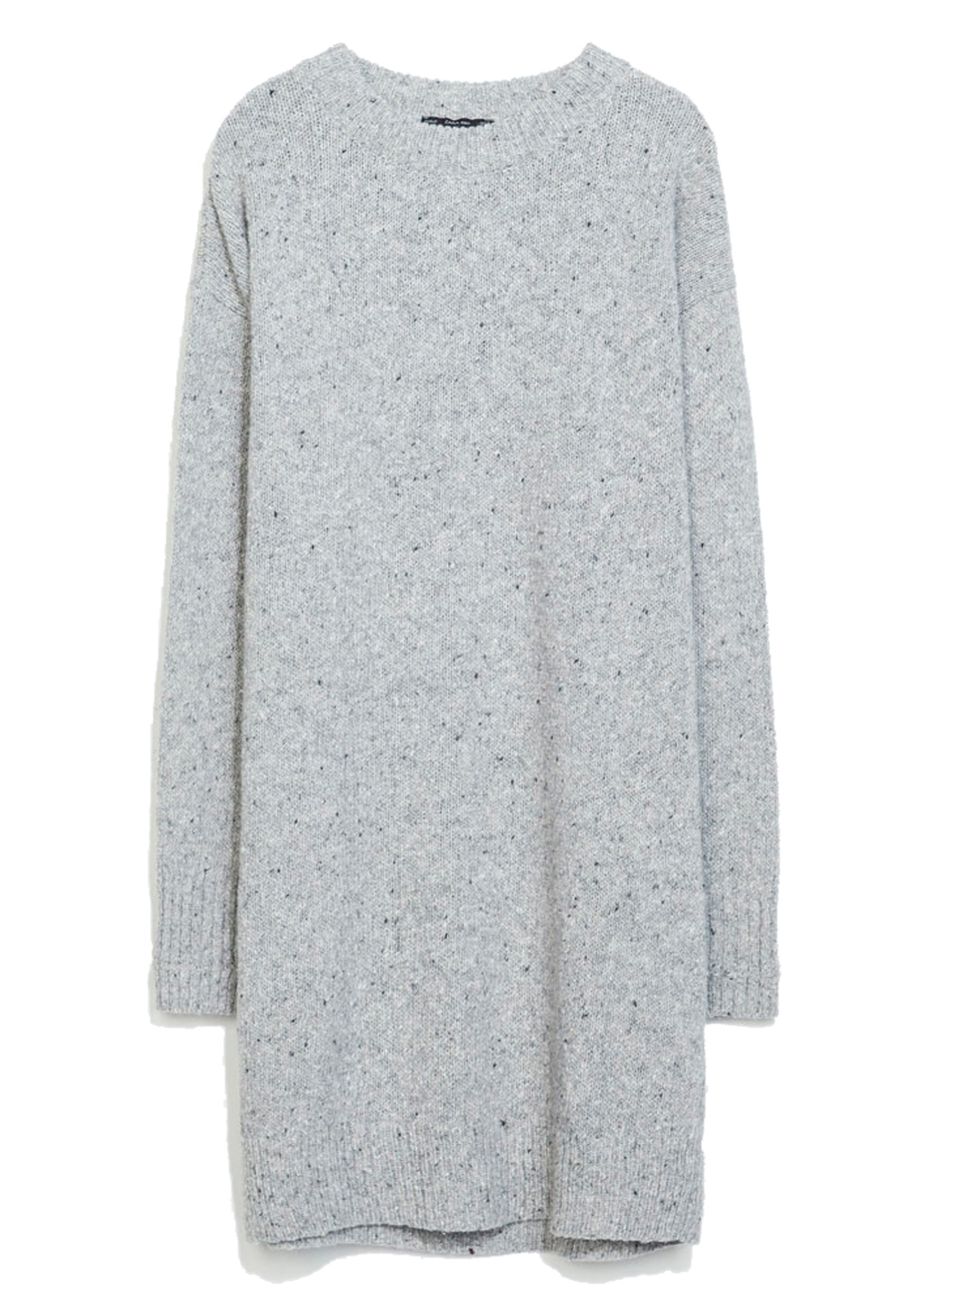 <p><a href="http://www.zara.com/uk/en/woman/dresses/tweed-dress-with-cuff-slit-c269185p2040537.html">Zara</a> knitted dress, £39.99</p>